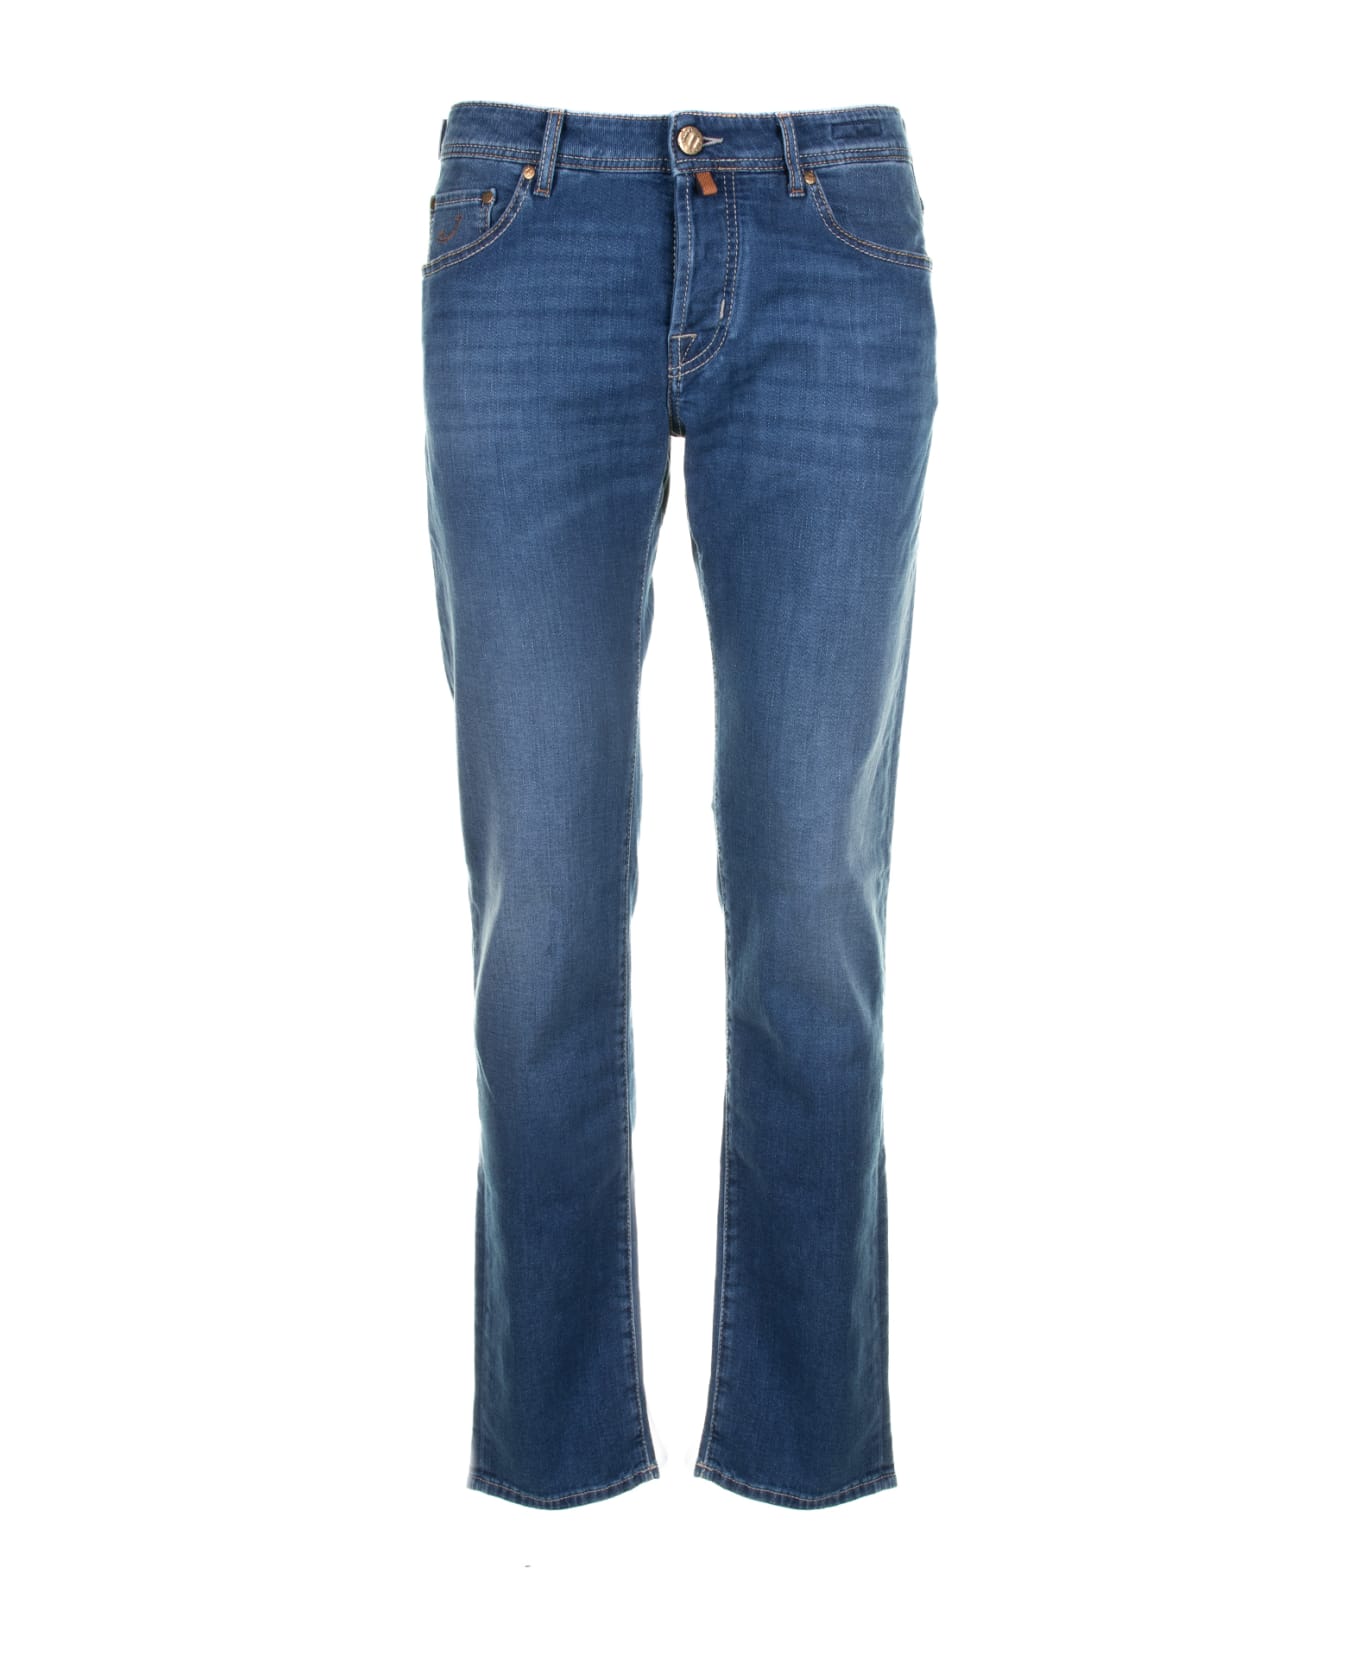 Jacob Cohen Jeans In Light Blue Denim - BLU INTERMEDIO デニム